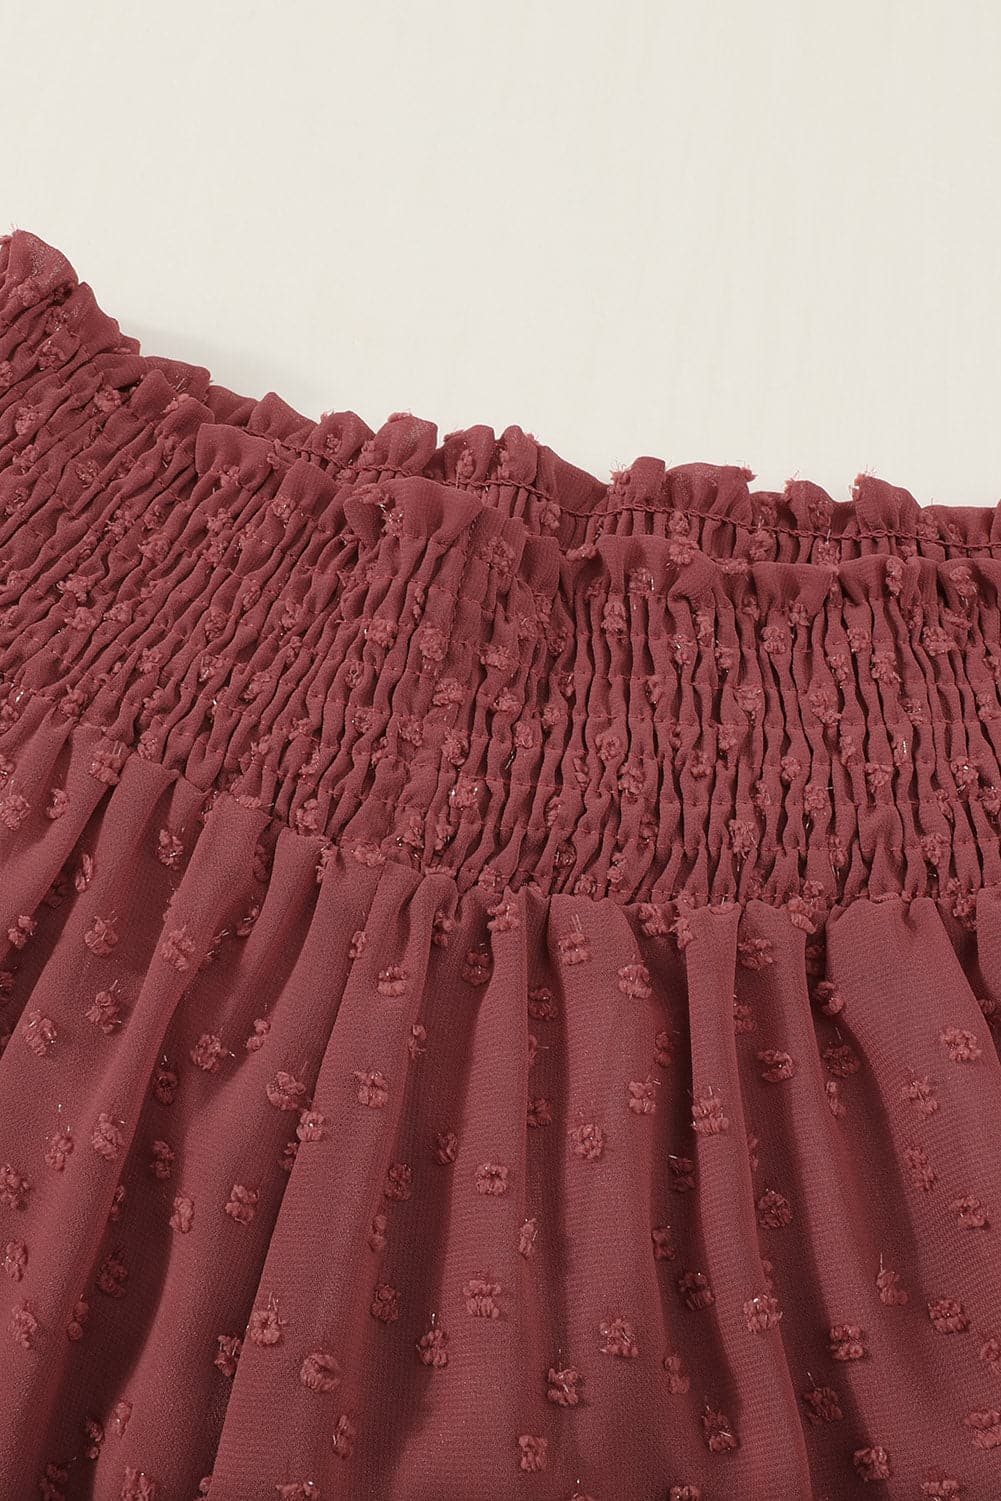 Vintage Rose Textured Smocked Waist Shorts - AVAH